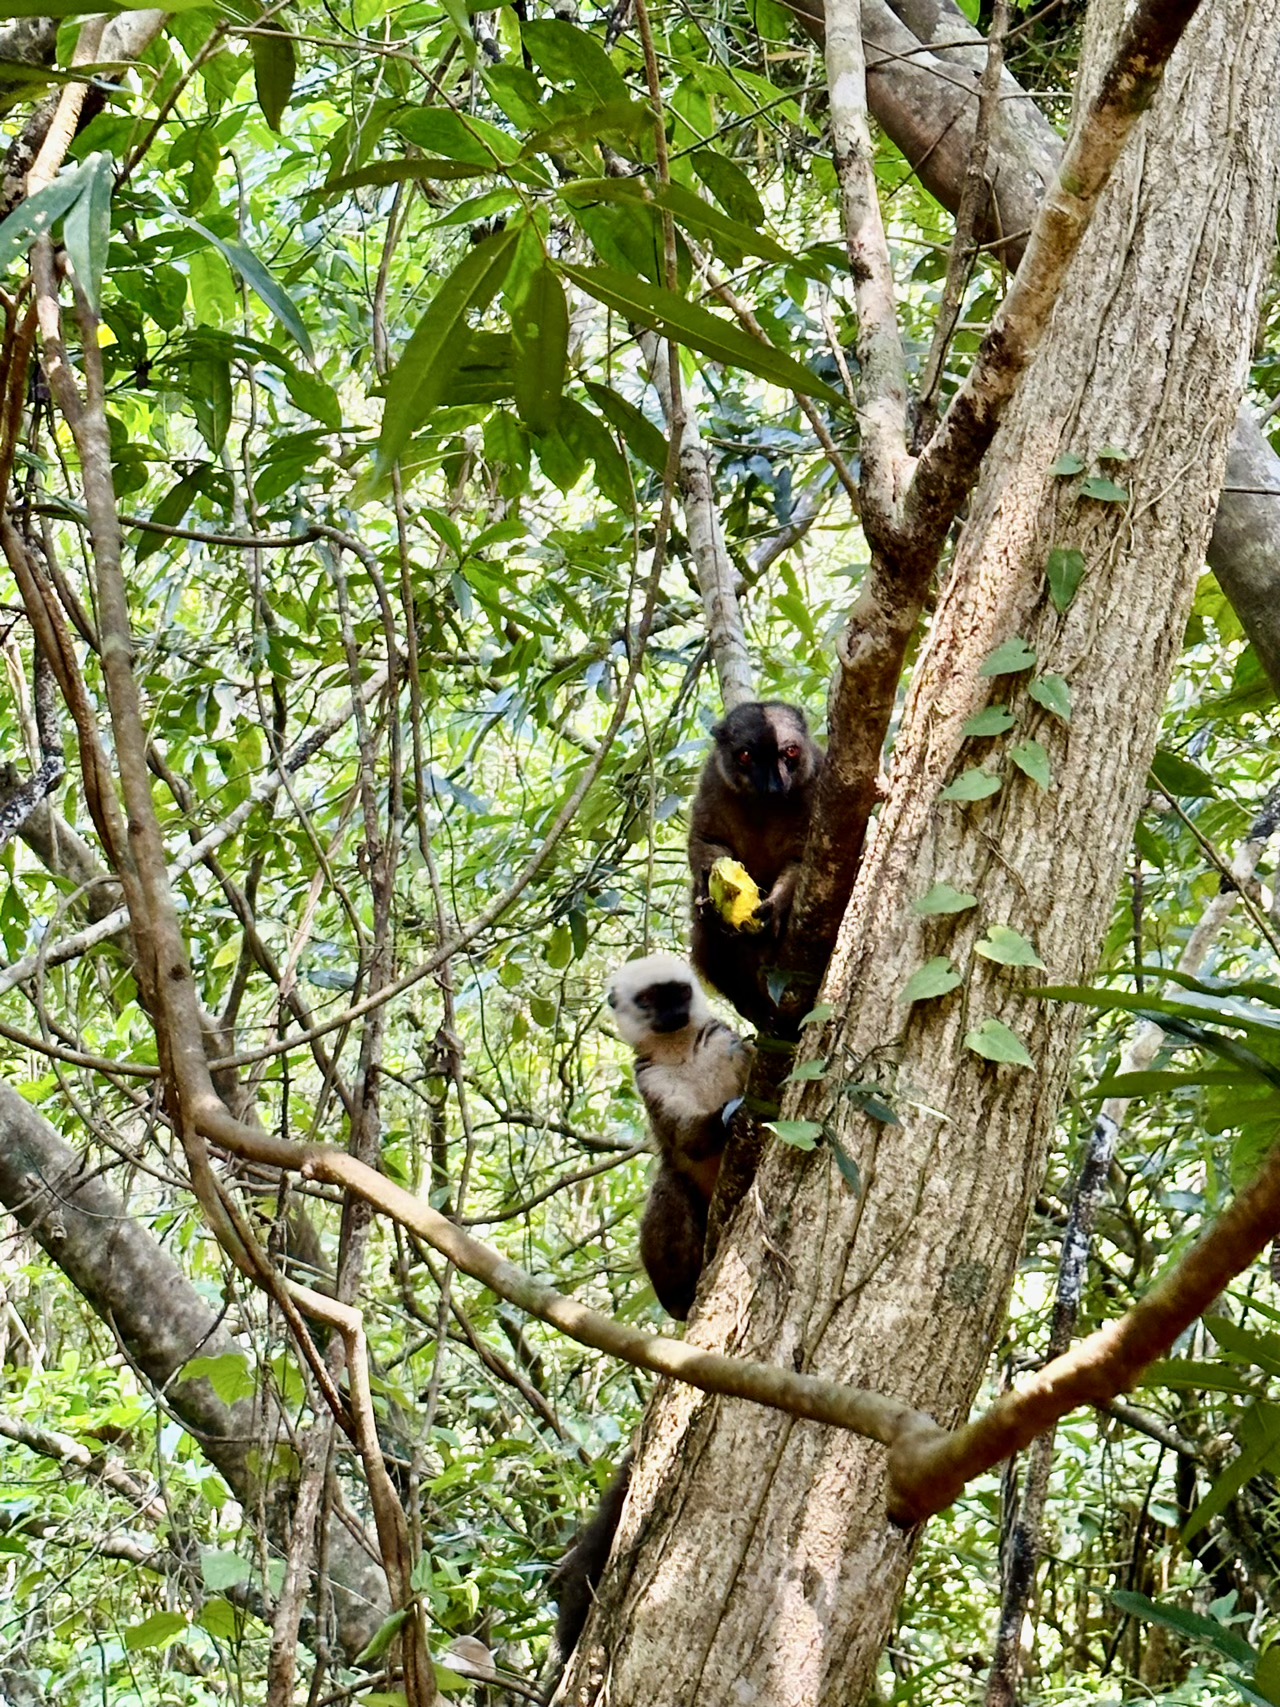 Two more lemurs eating fruit